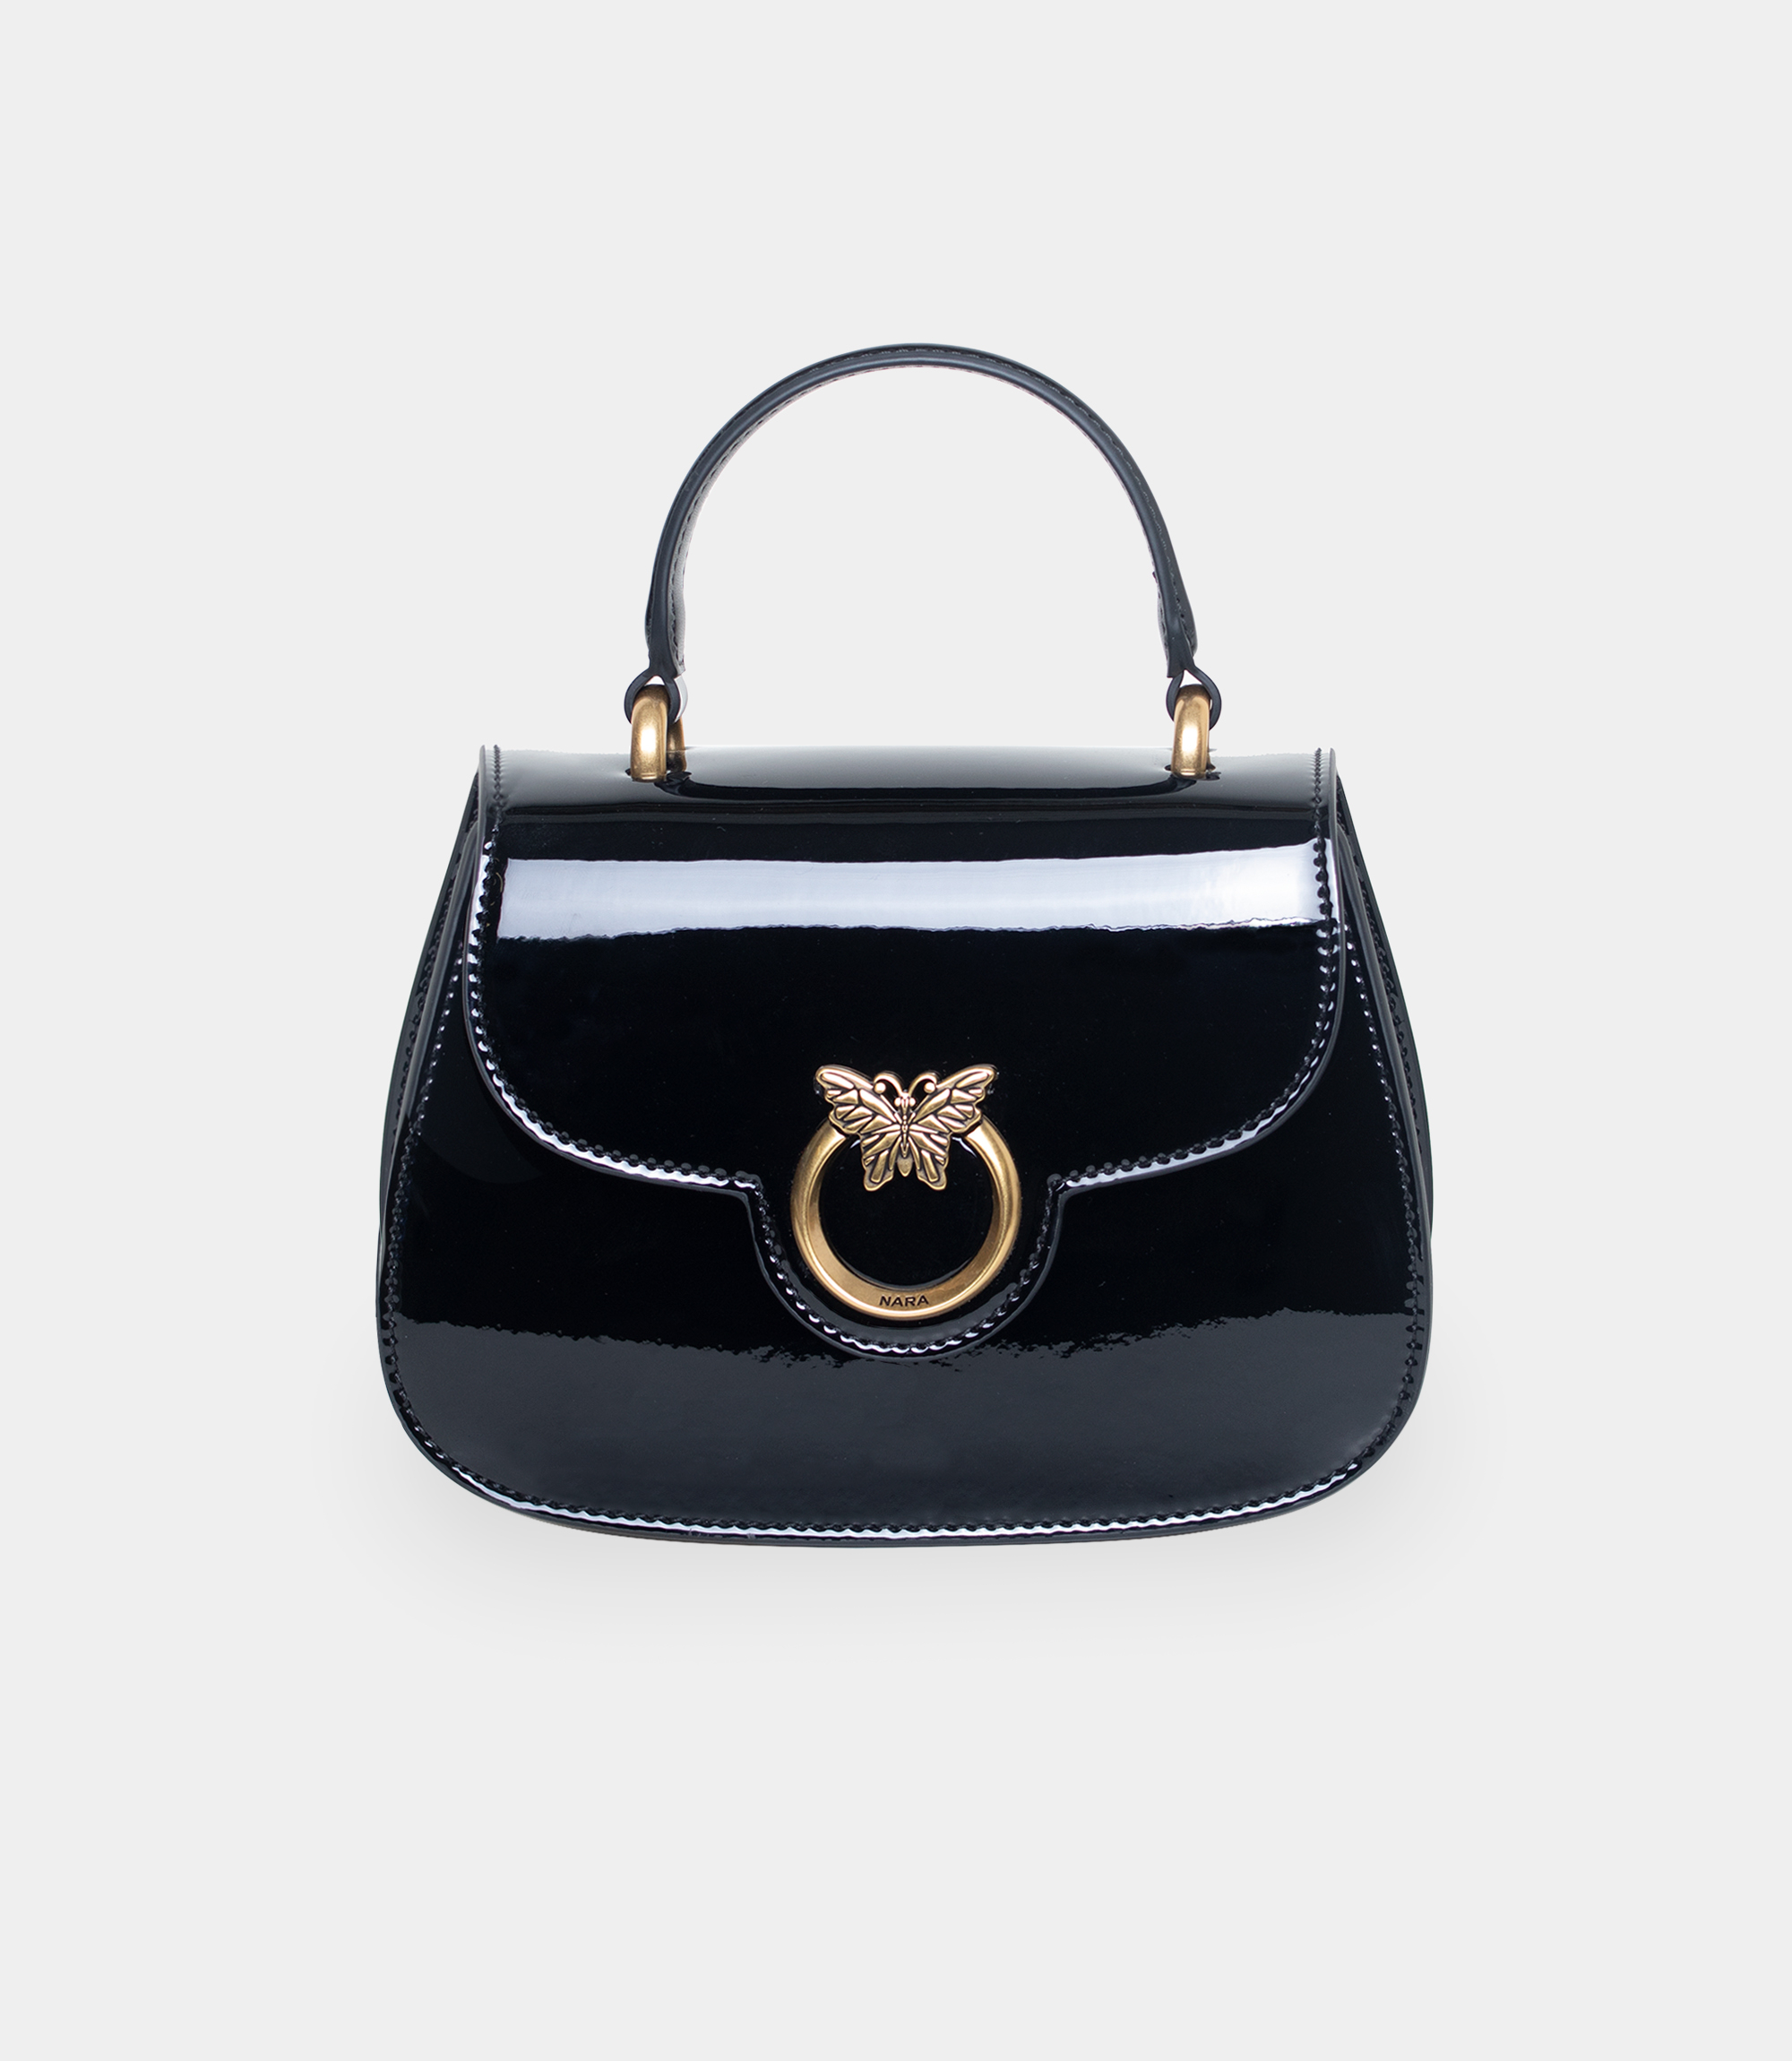 Black mini handbag made of patent leather - ACCESSORIES - NaraMilano